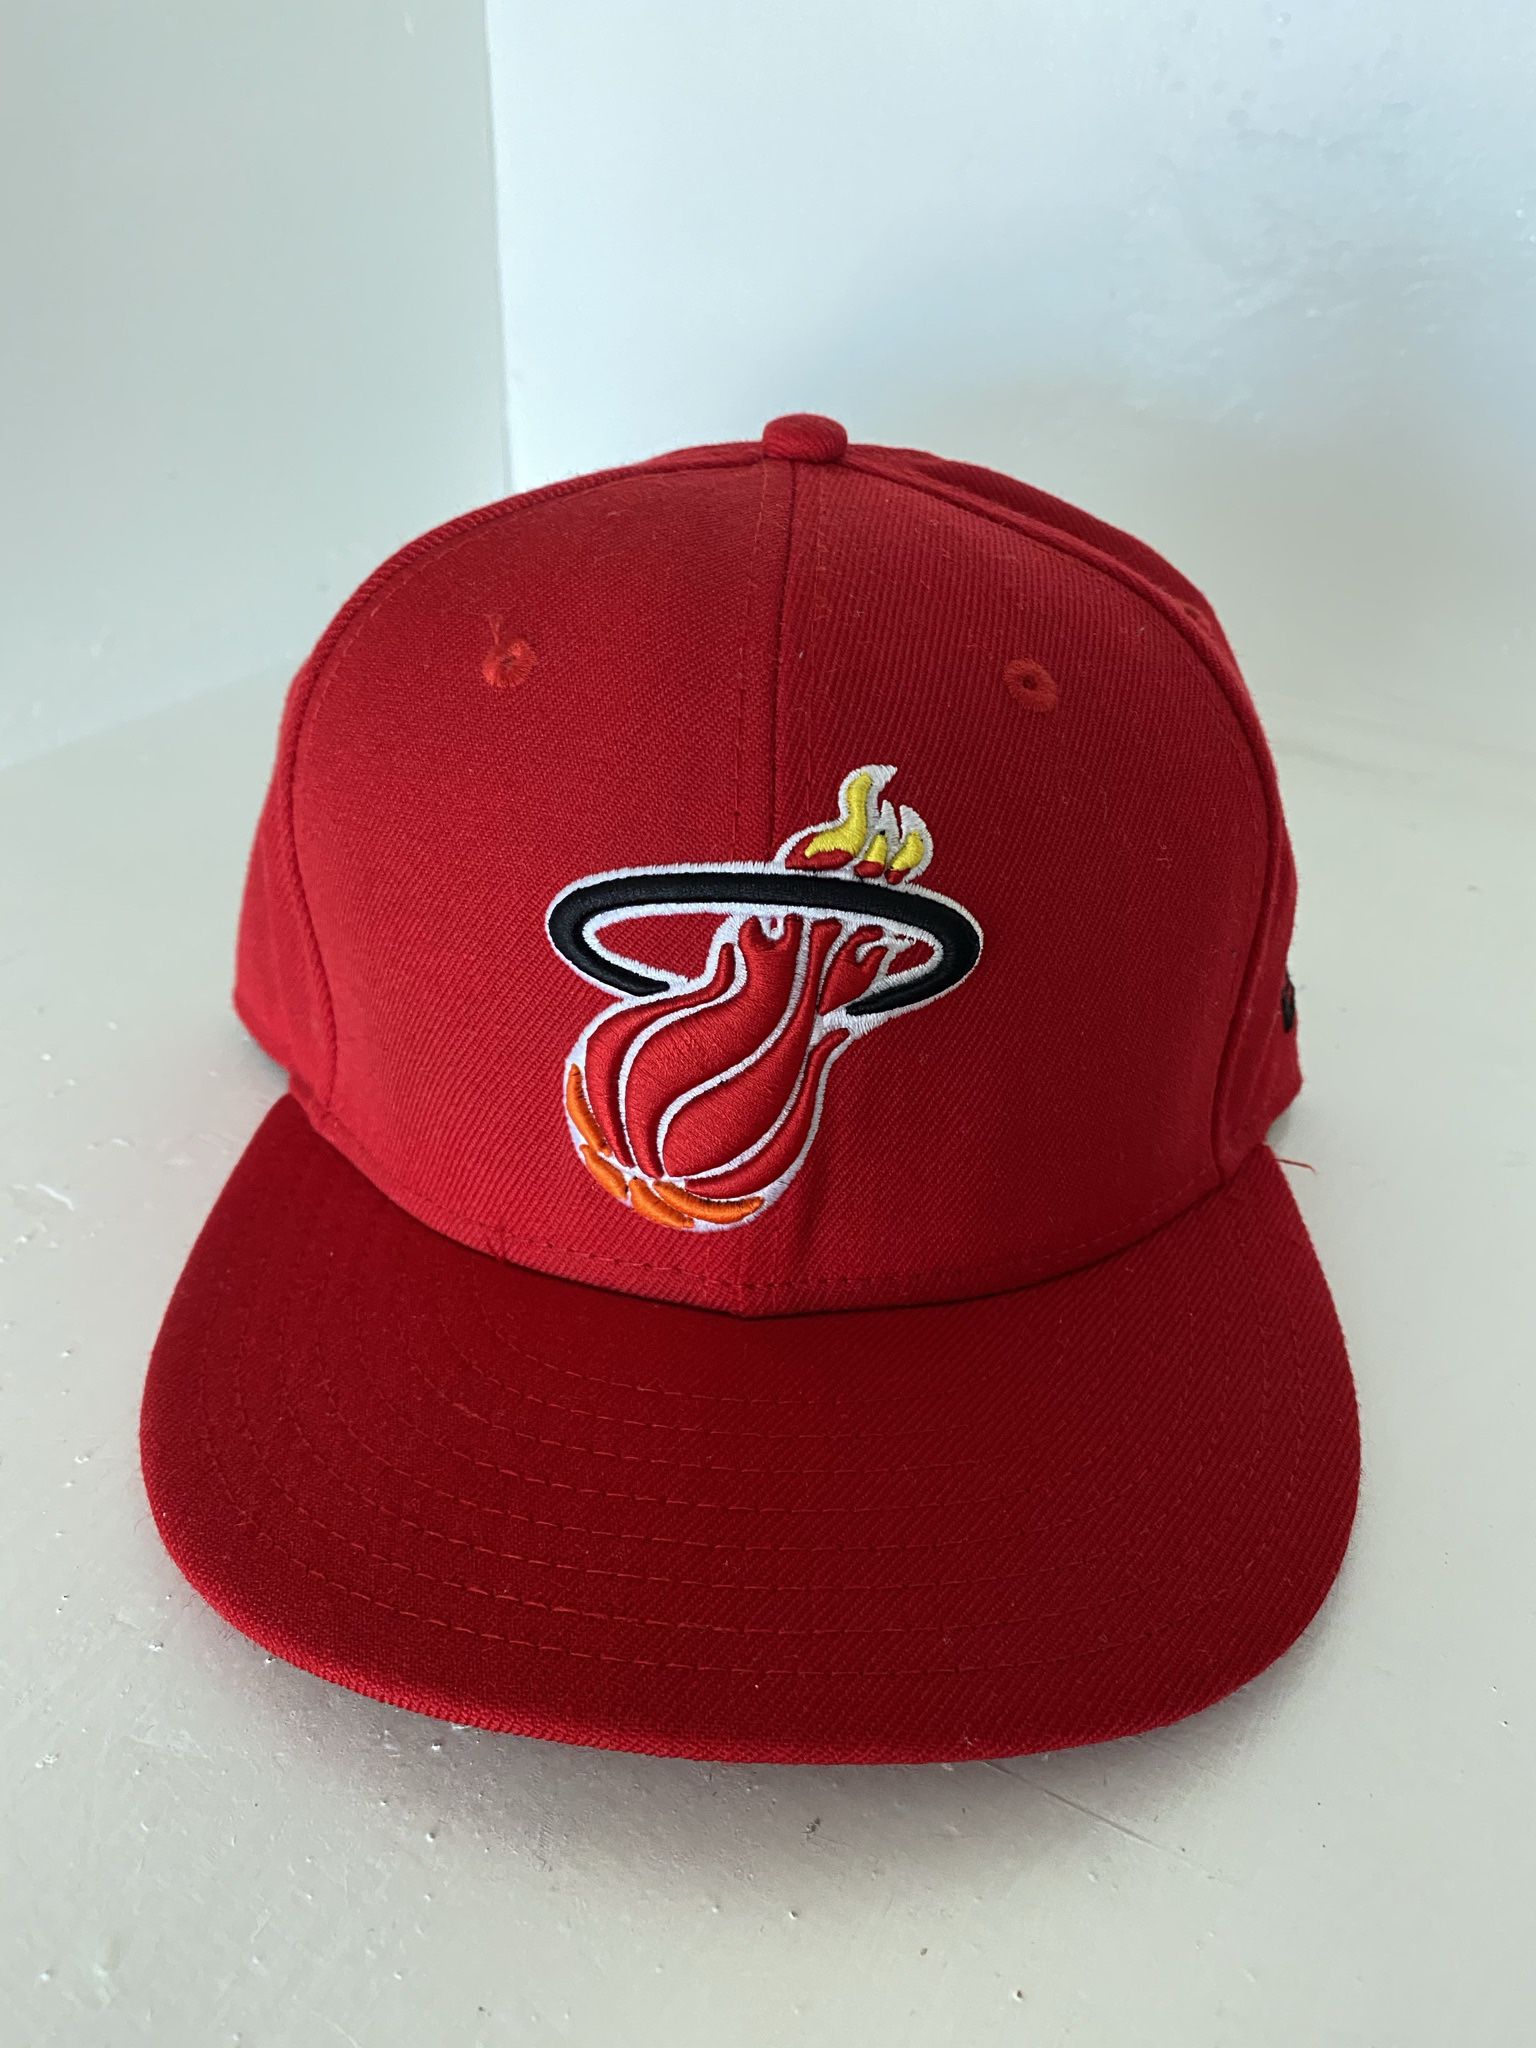 New Era Miami Heat Fitted Cap! Size 7 1/2! 🔥🔥